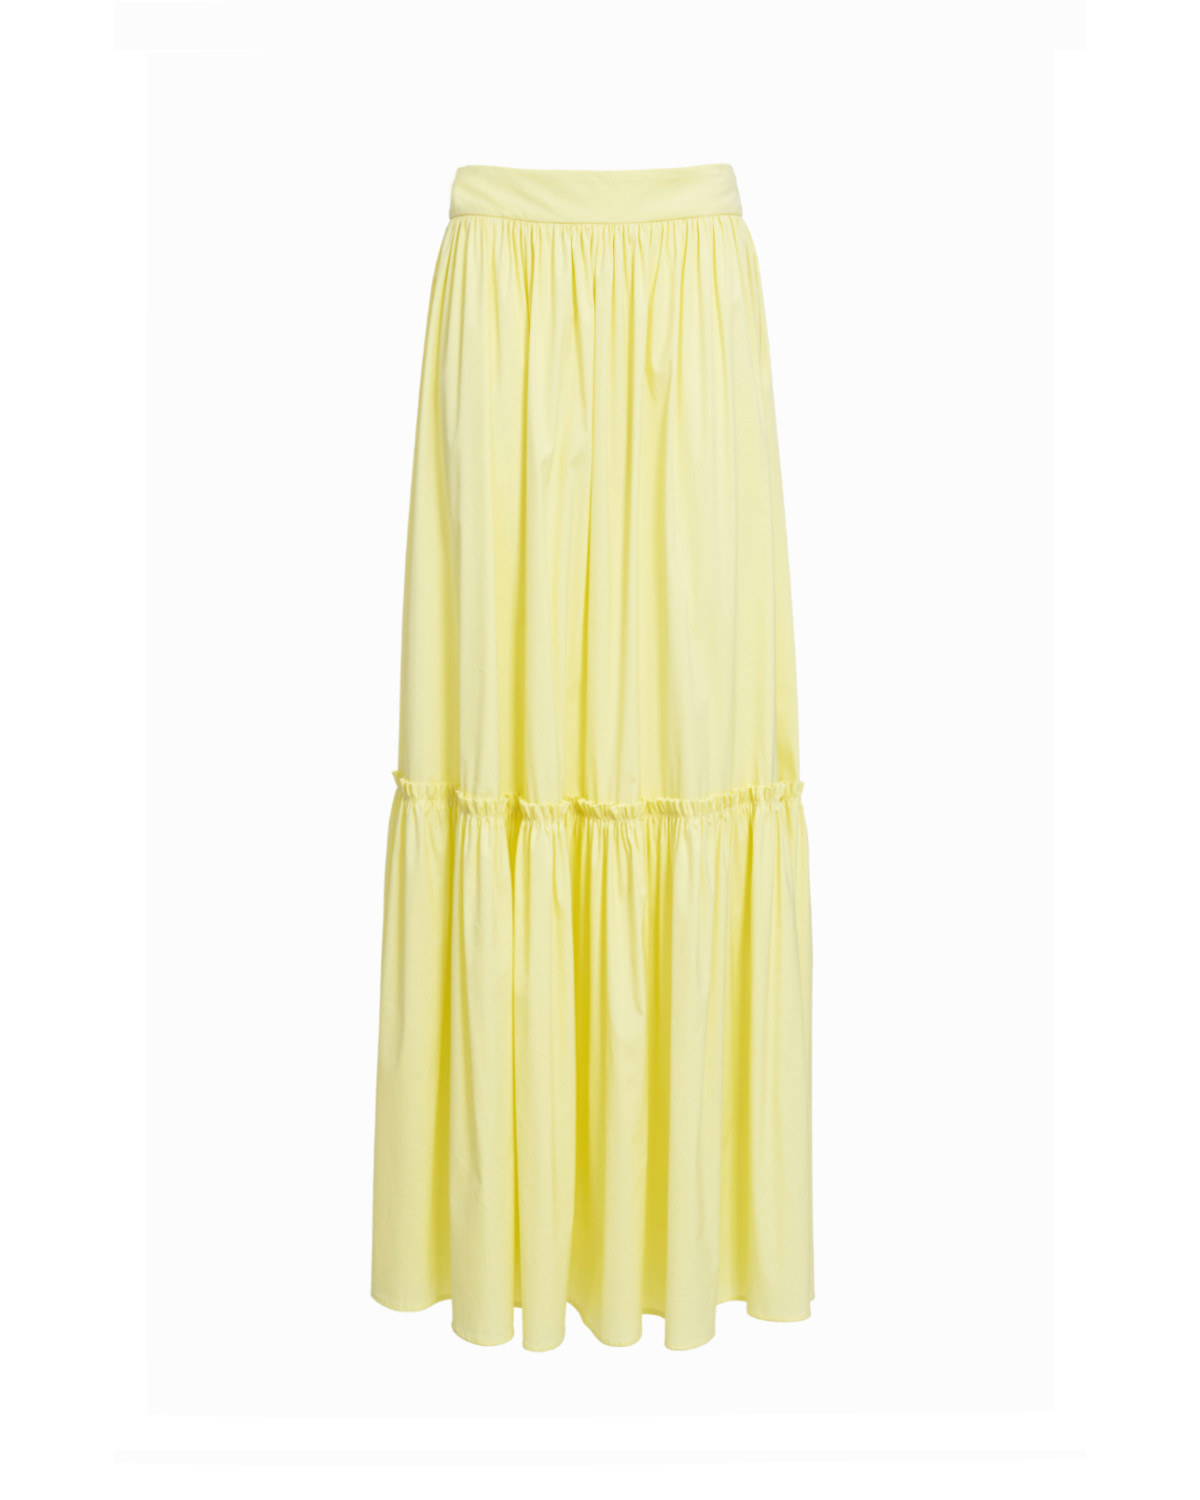 Light yellow stretch-cotton maxi skirt with high waist